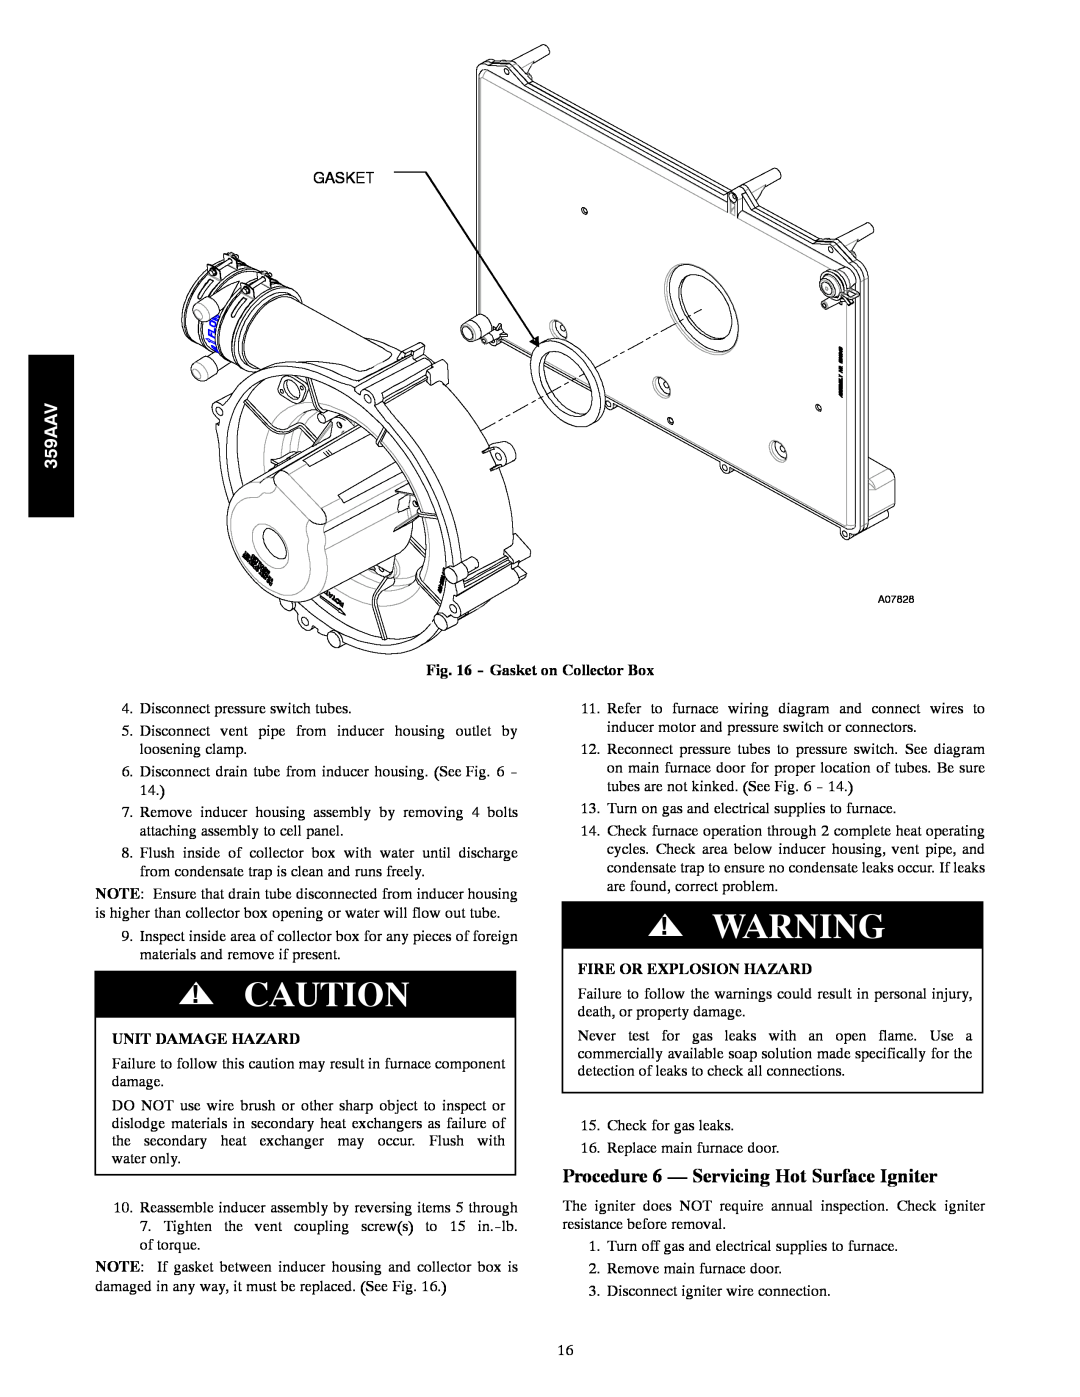 Bryant 359AAV instruction manual Procedure 6 - Servicing Hot Surface Igniter, Gasket on Collector Box, Unit Damage Hazard 